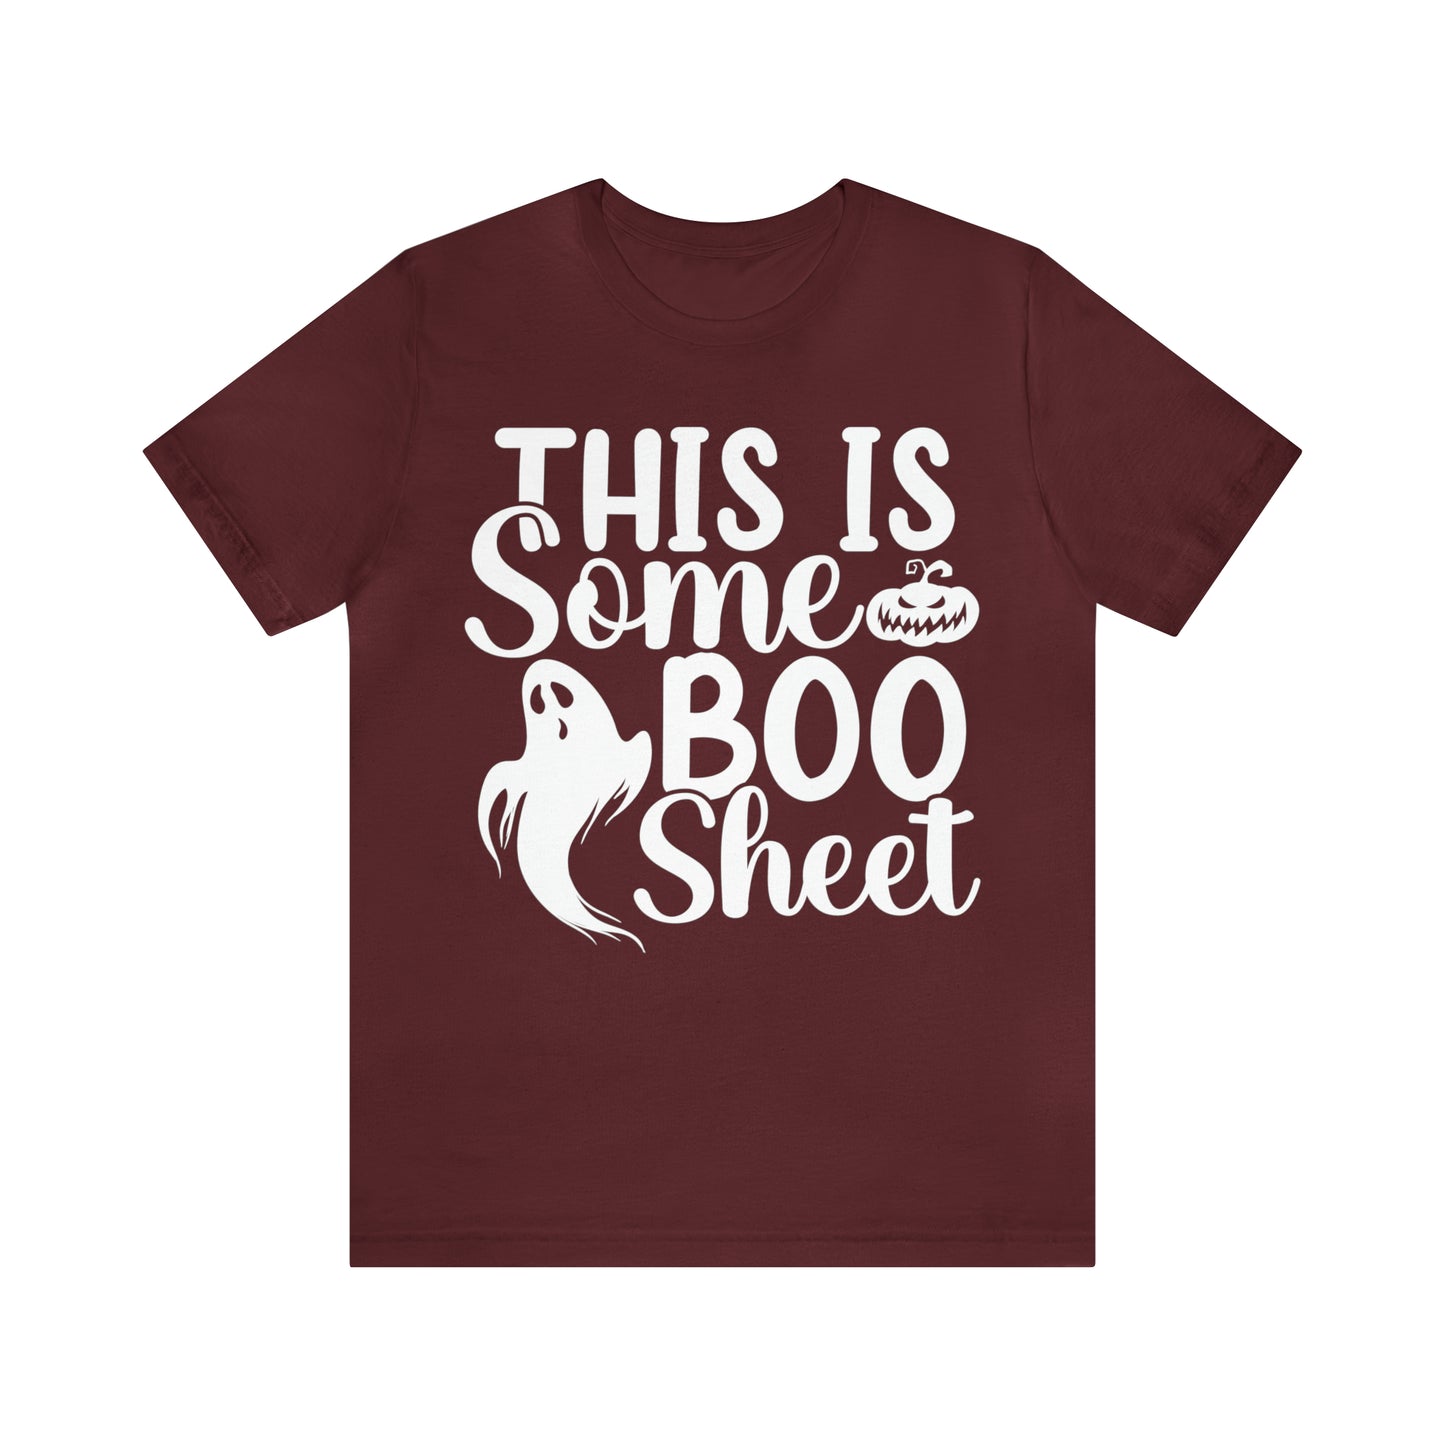 This Is Some Boo Sheet shirt, Boo Sheet Shirt, Spooky Season Tee, Retro Halloween Kids Shirt, Funny Halloween Ghost Shirt, T653